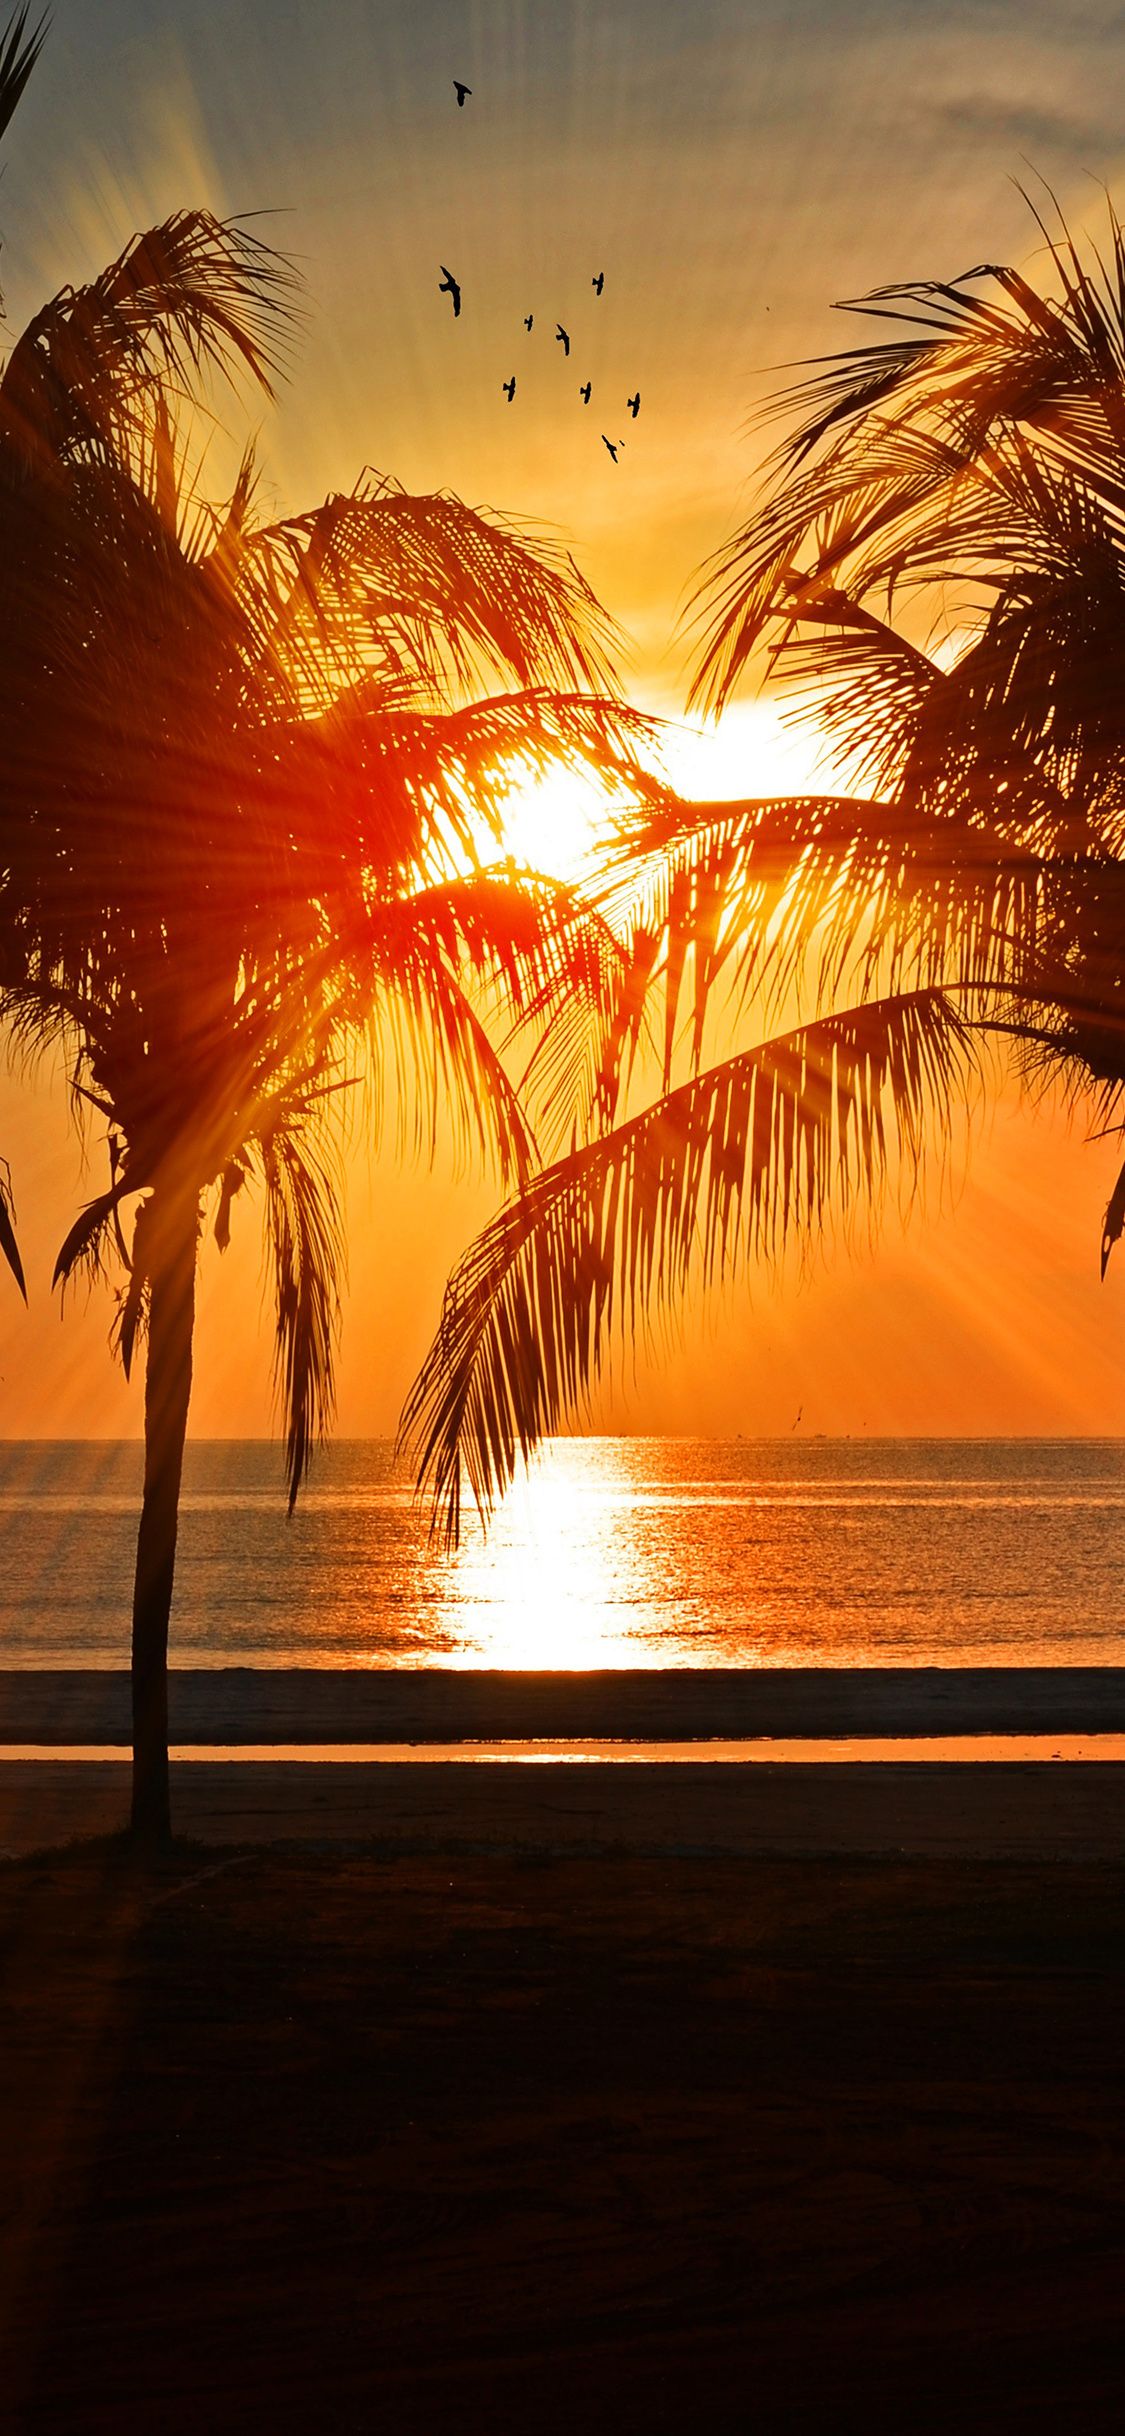 iPhone X wallpaper. beach vacation summer night sunset red palm tree